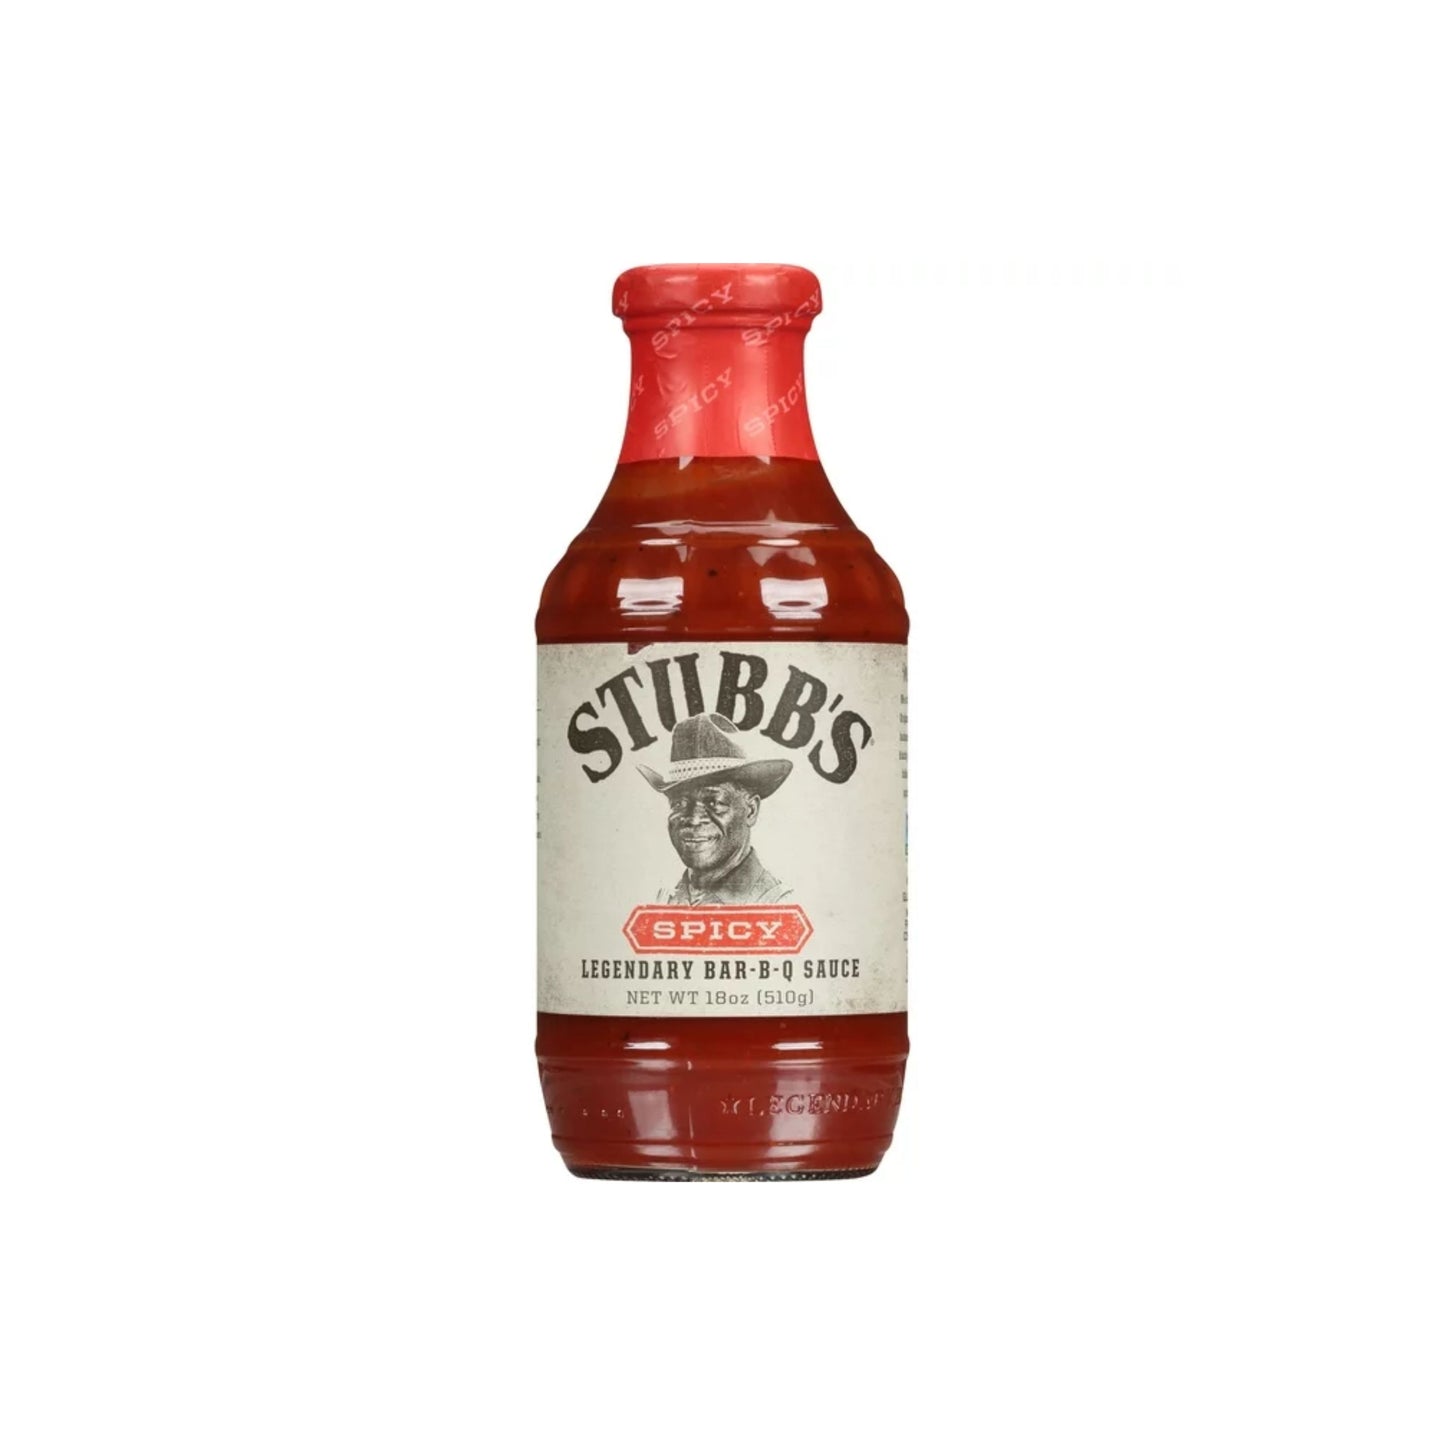 Stubbs Spicy BBQ Sauce